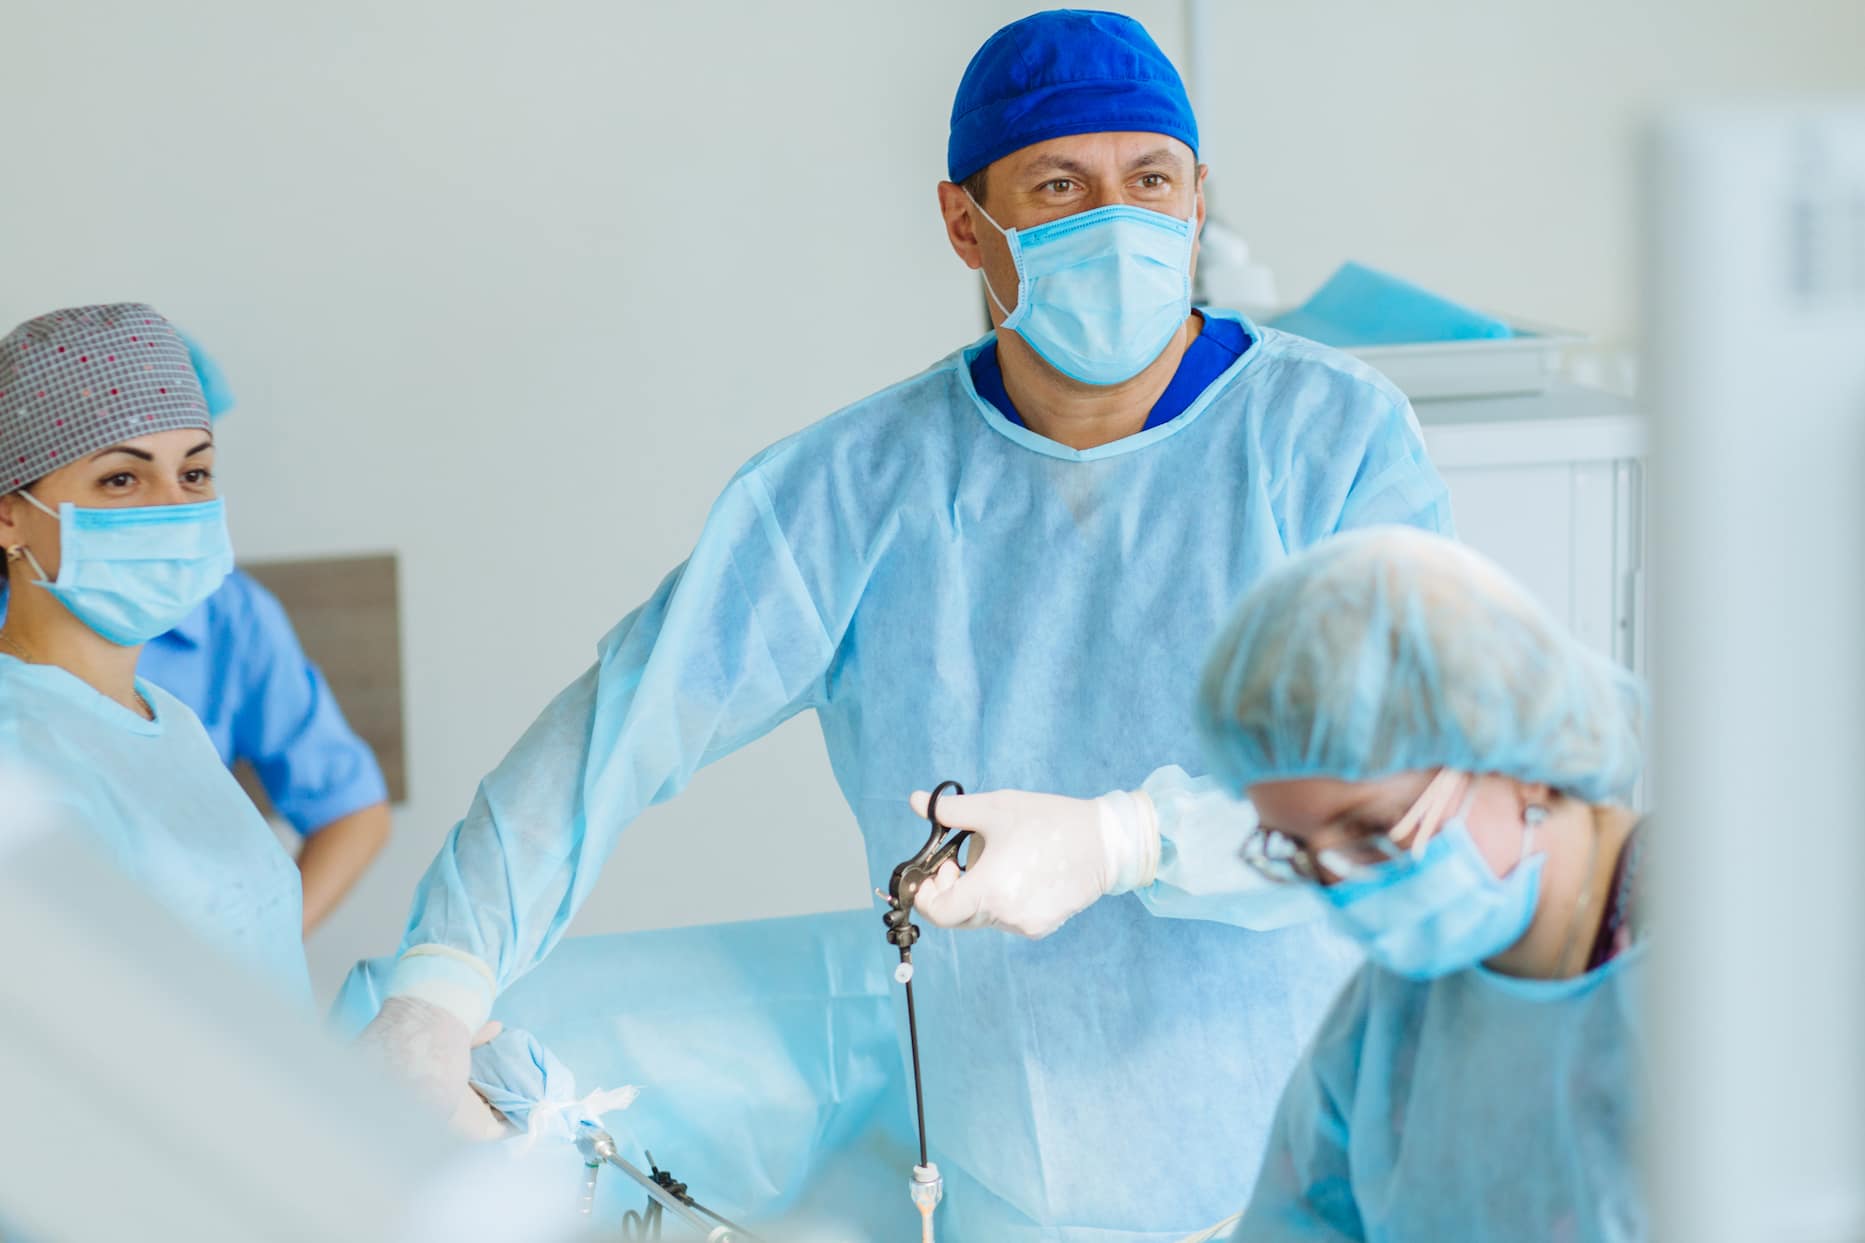 Turkiye laparoscopic surgery procedure